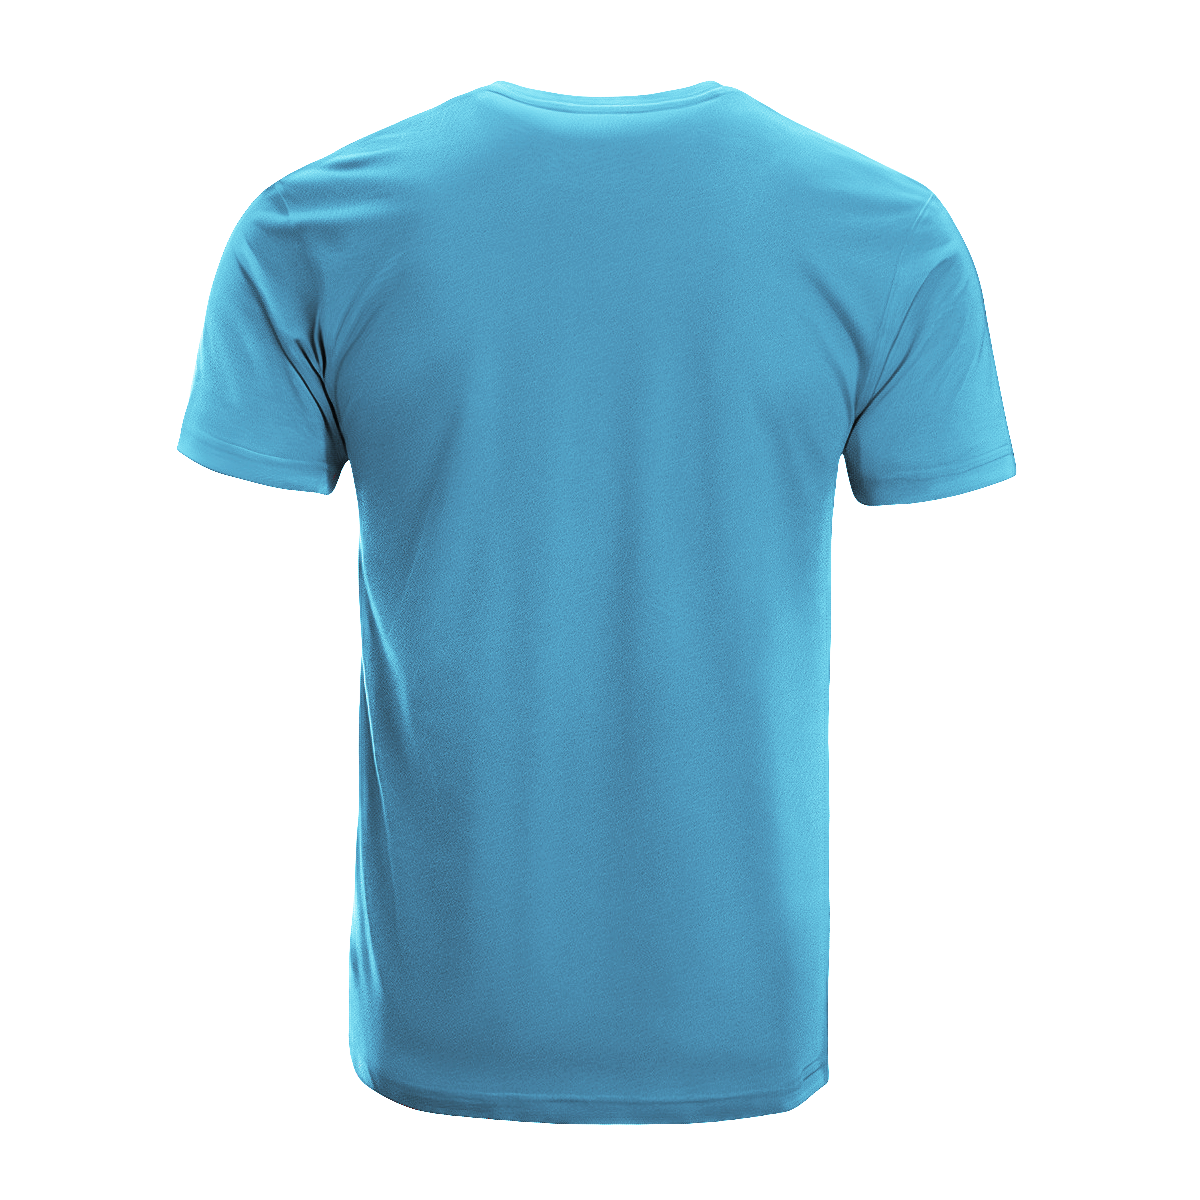 Darroch Tartan Crest T-shirt - I'm not yelling style